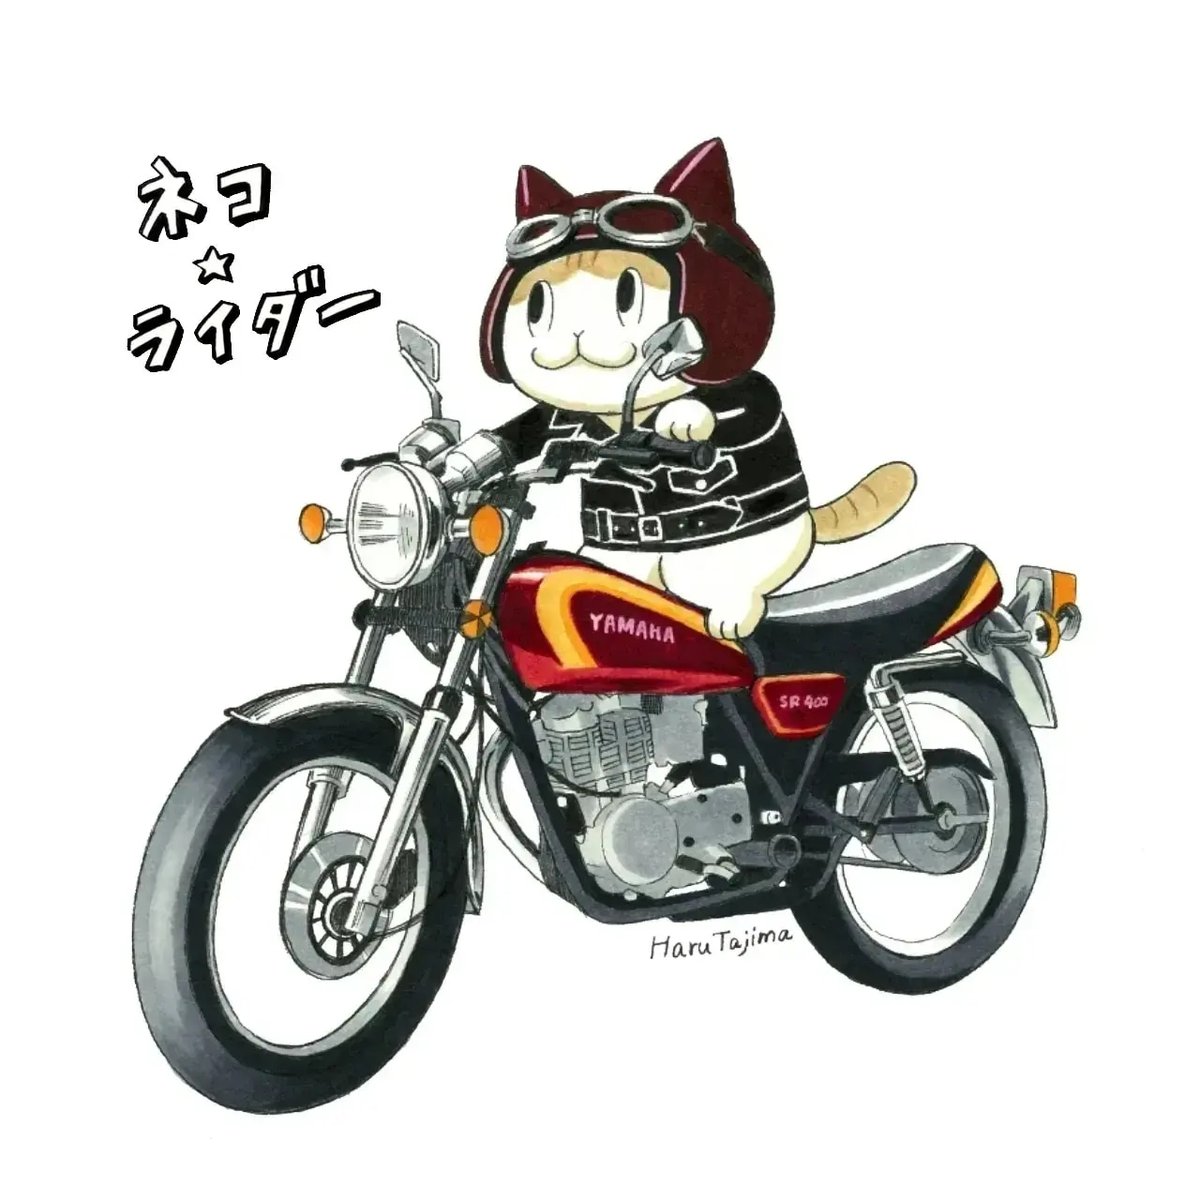 ground vehicle motor vehicle motorcycle no humans cat goggles white background  illustration images